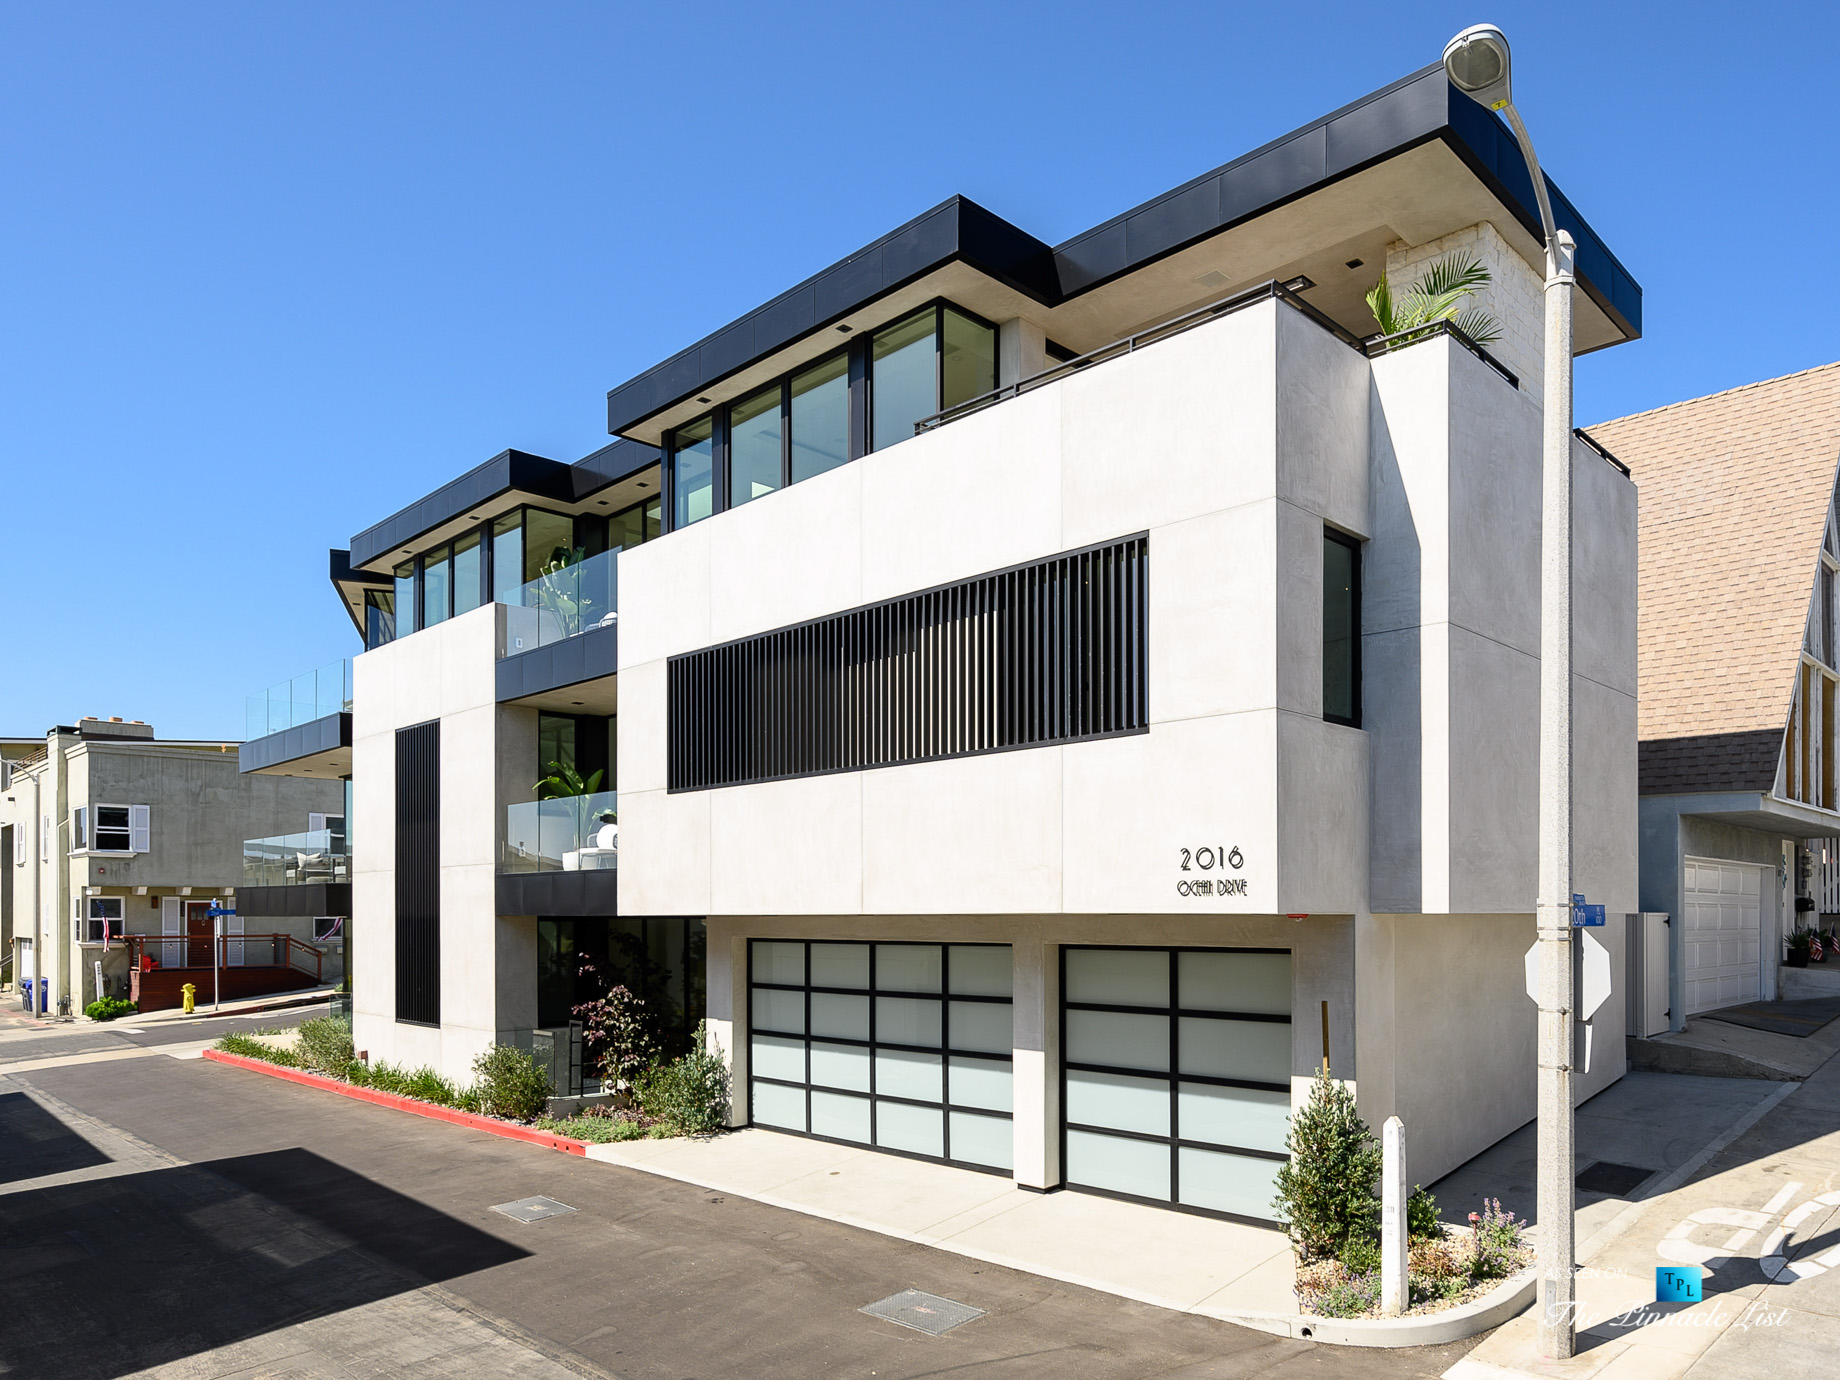 2016 Ocean Dr, Manhattan Beach, CA, USA - Garage Exterior View - Luxury Real Estate - Modern Ocean View Home